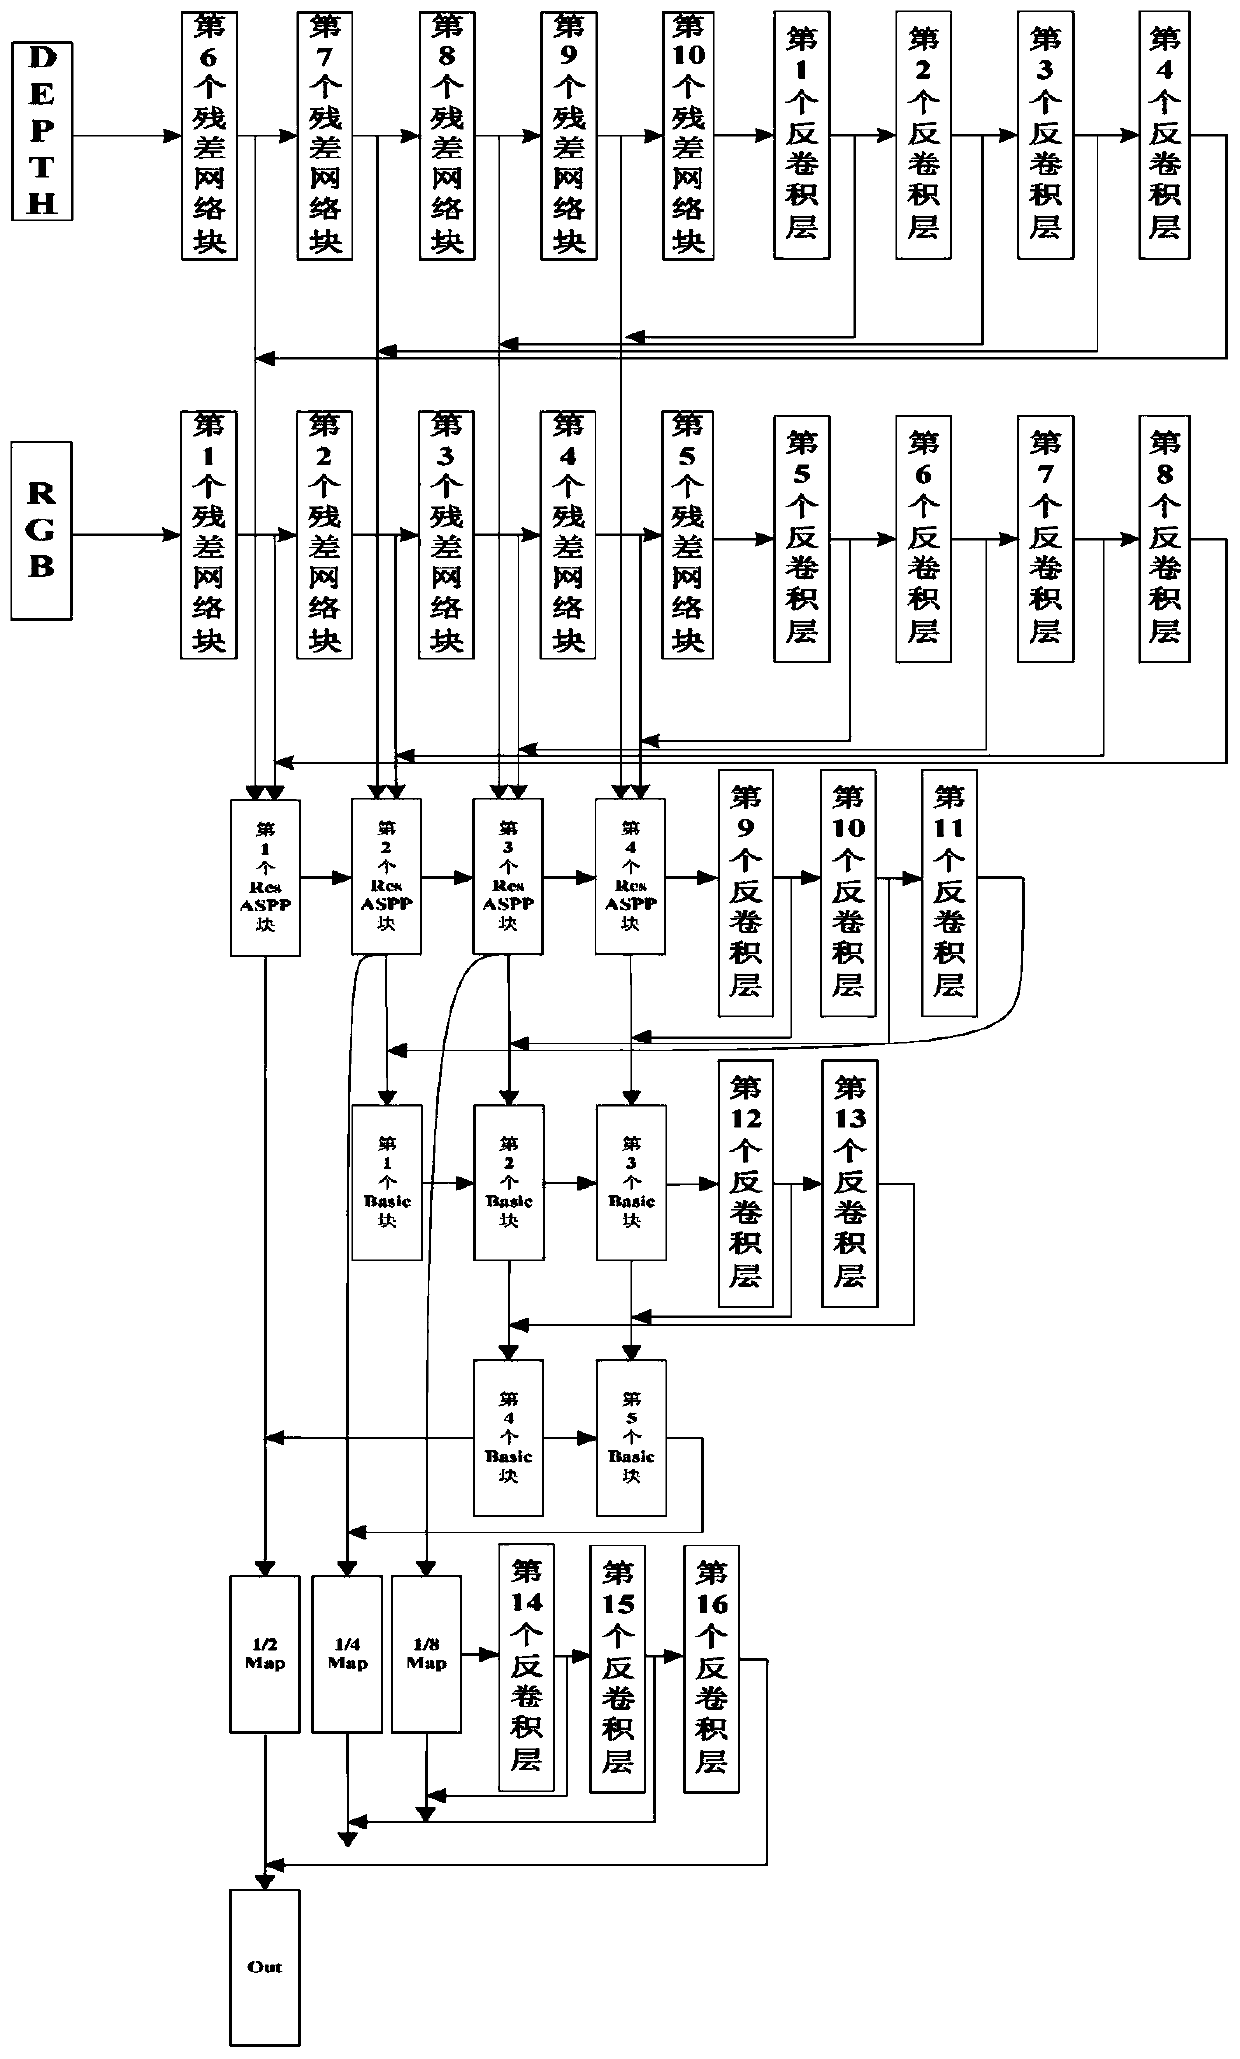 Semantic segmentation method based on residual pyramid pooling neural network